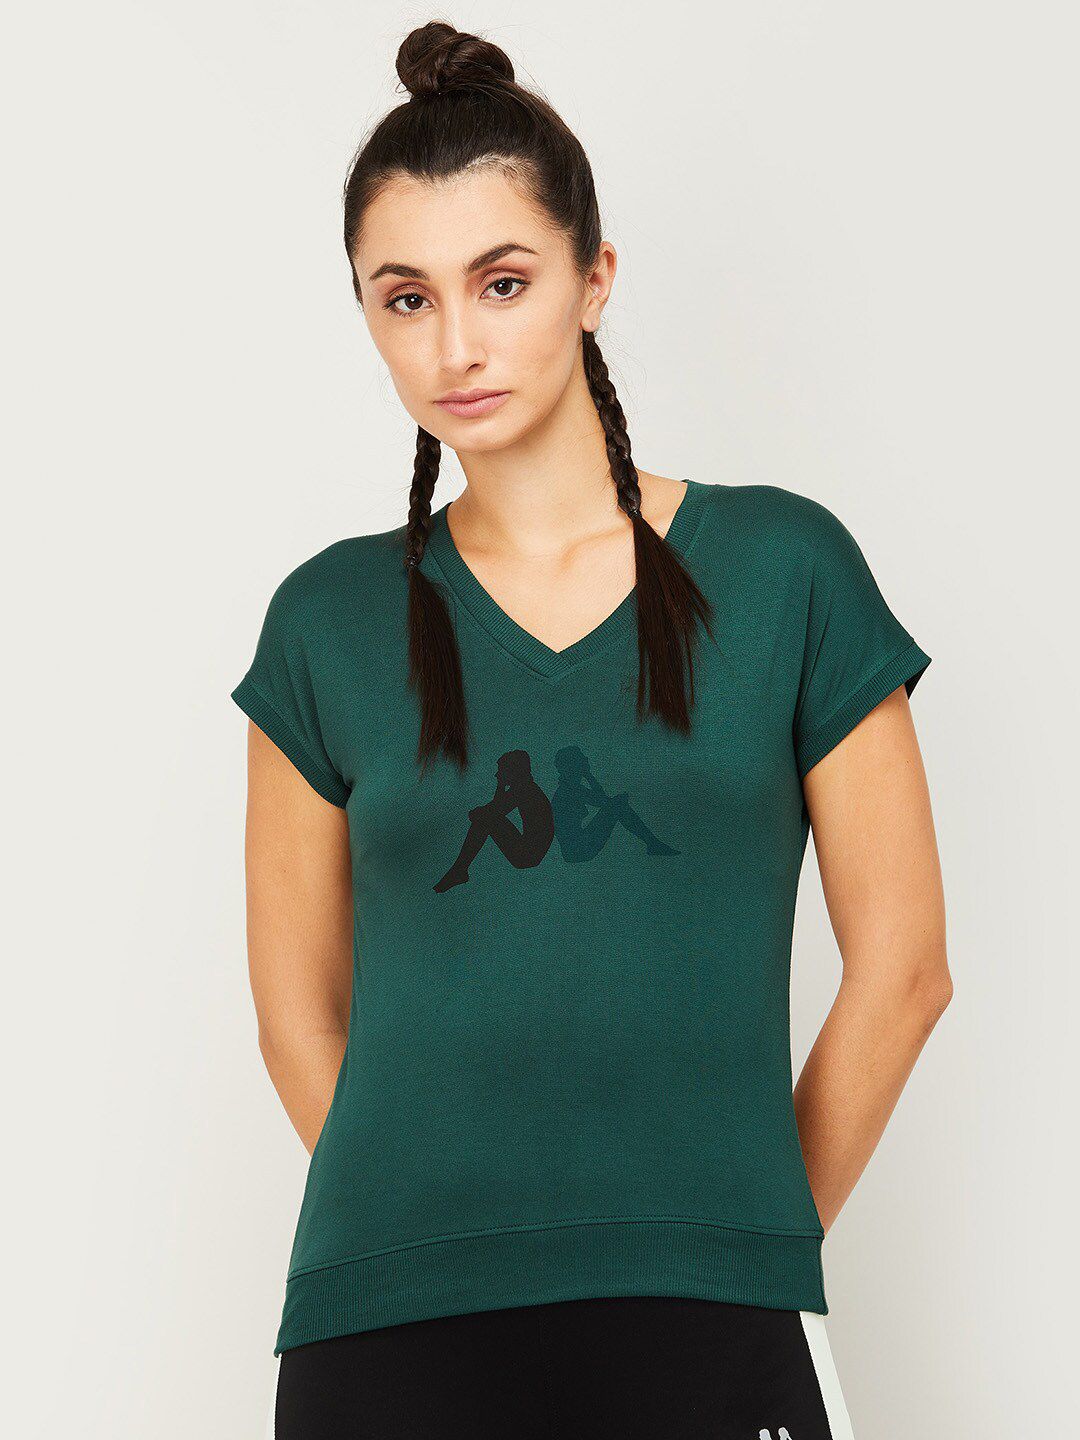 Kappa Women Olive Green Sweatshirt Price in India